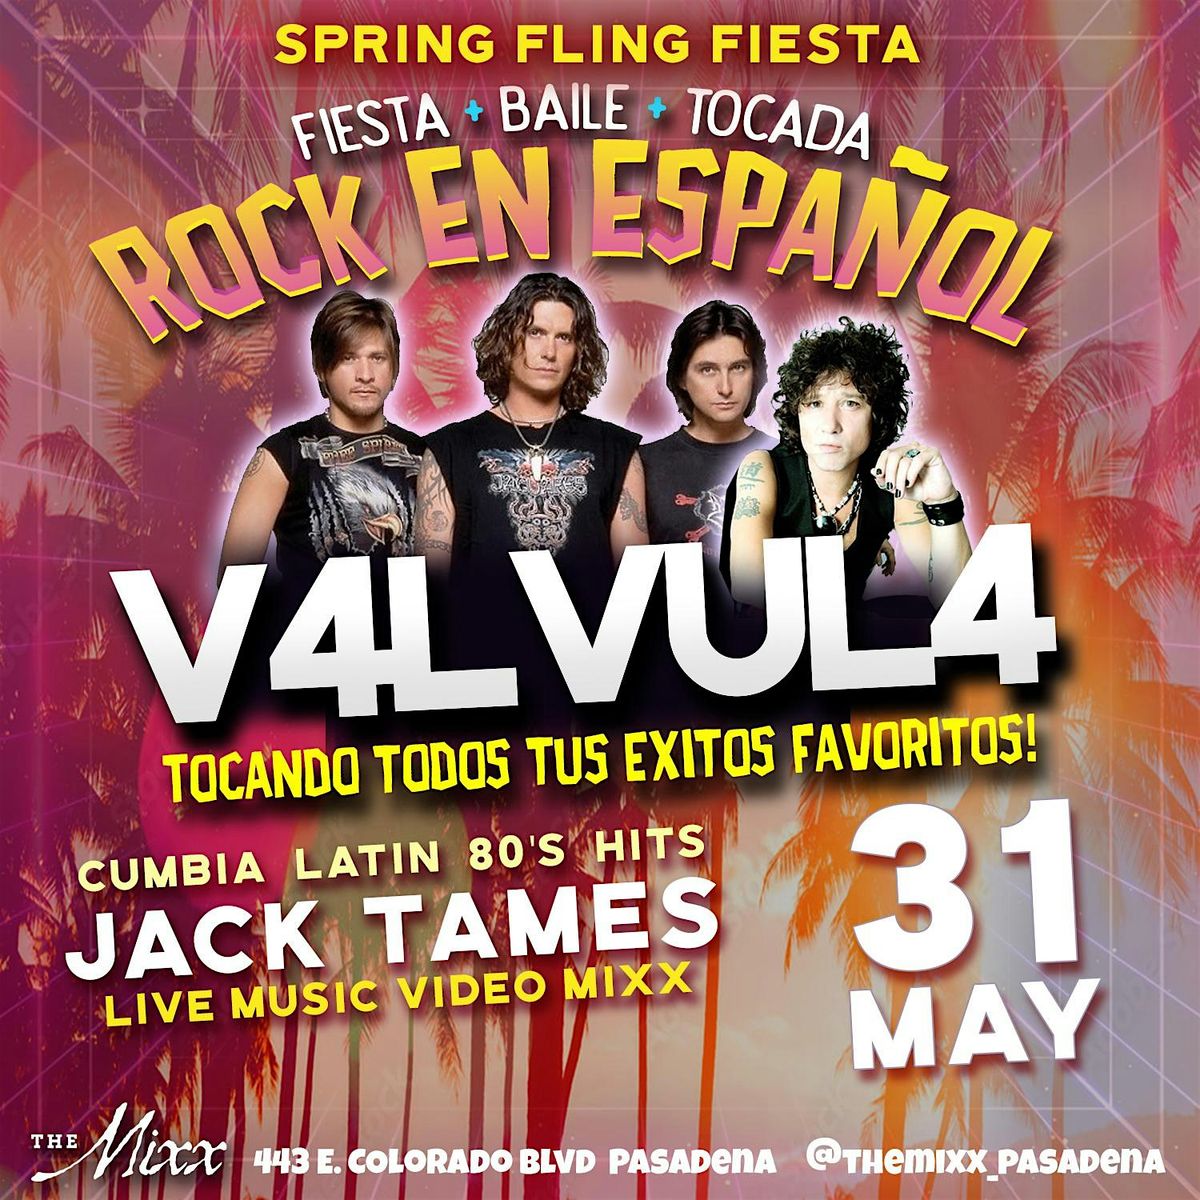 Rock En Espa\u00f1ol en VIVO con Grupo Valvua